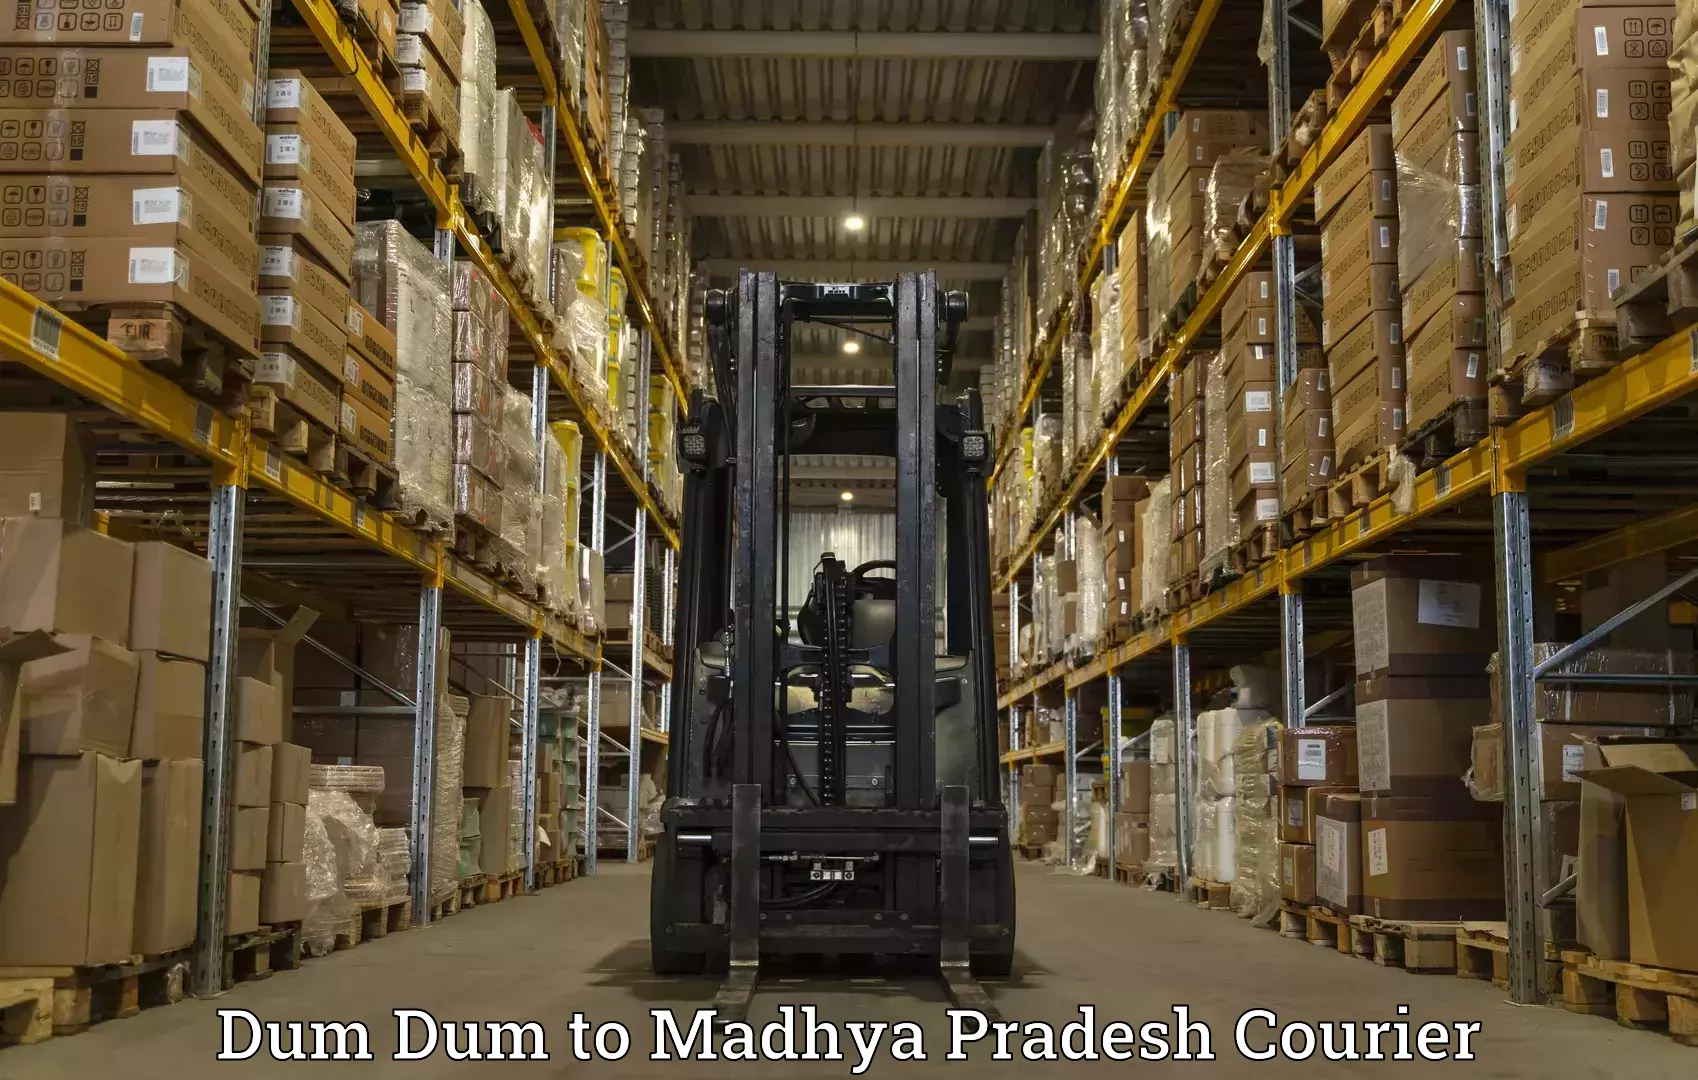 Courier service innovation in Dum Dum to Madhya Pradesh